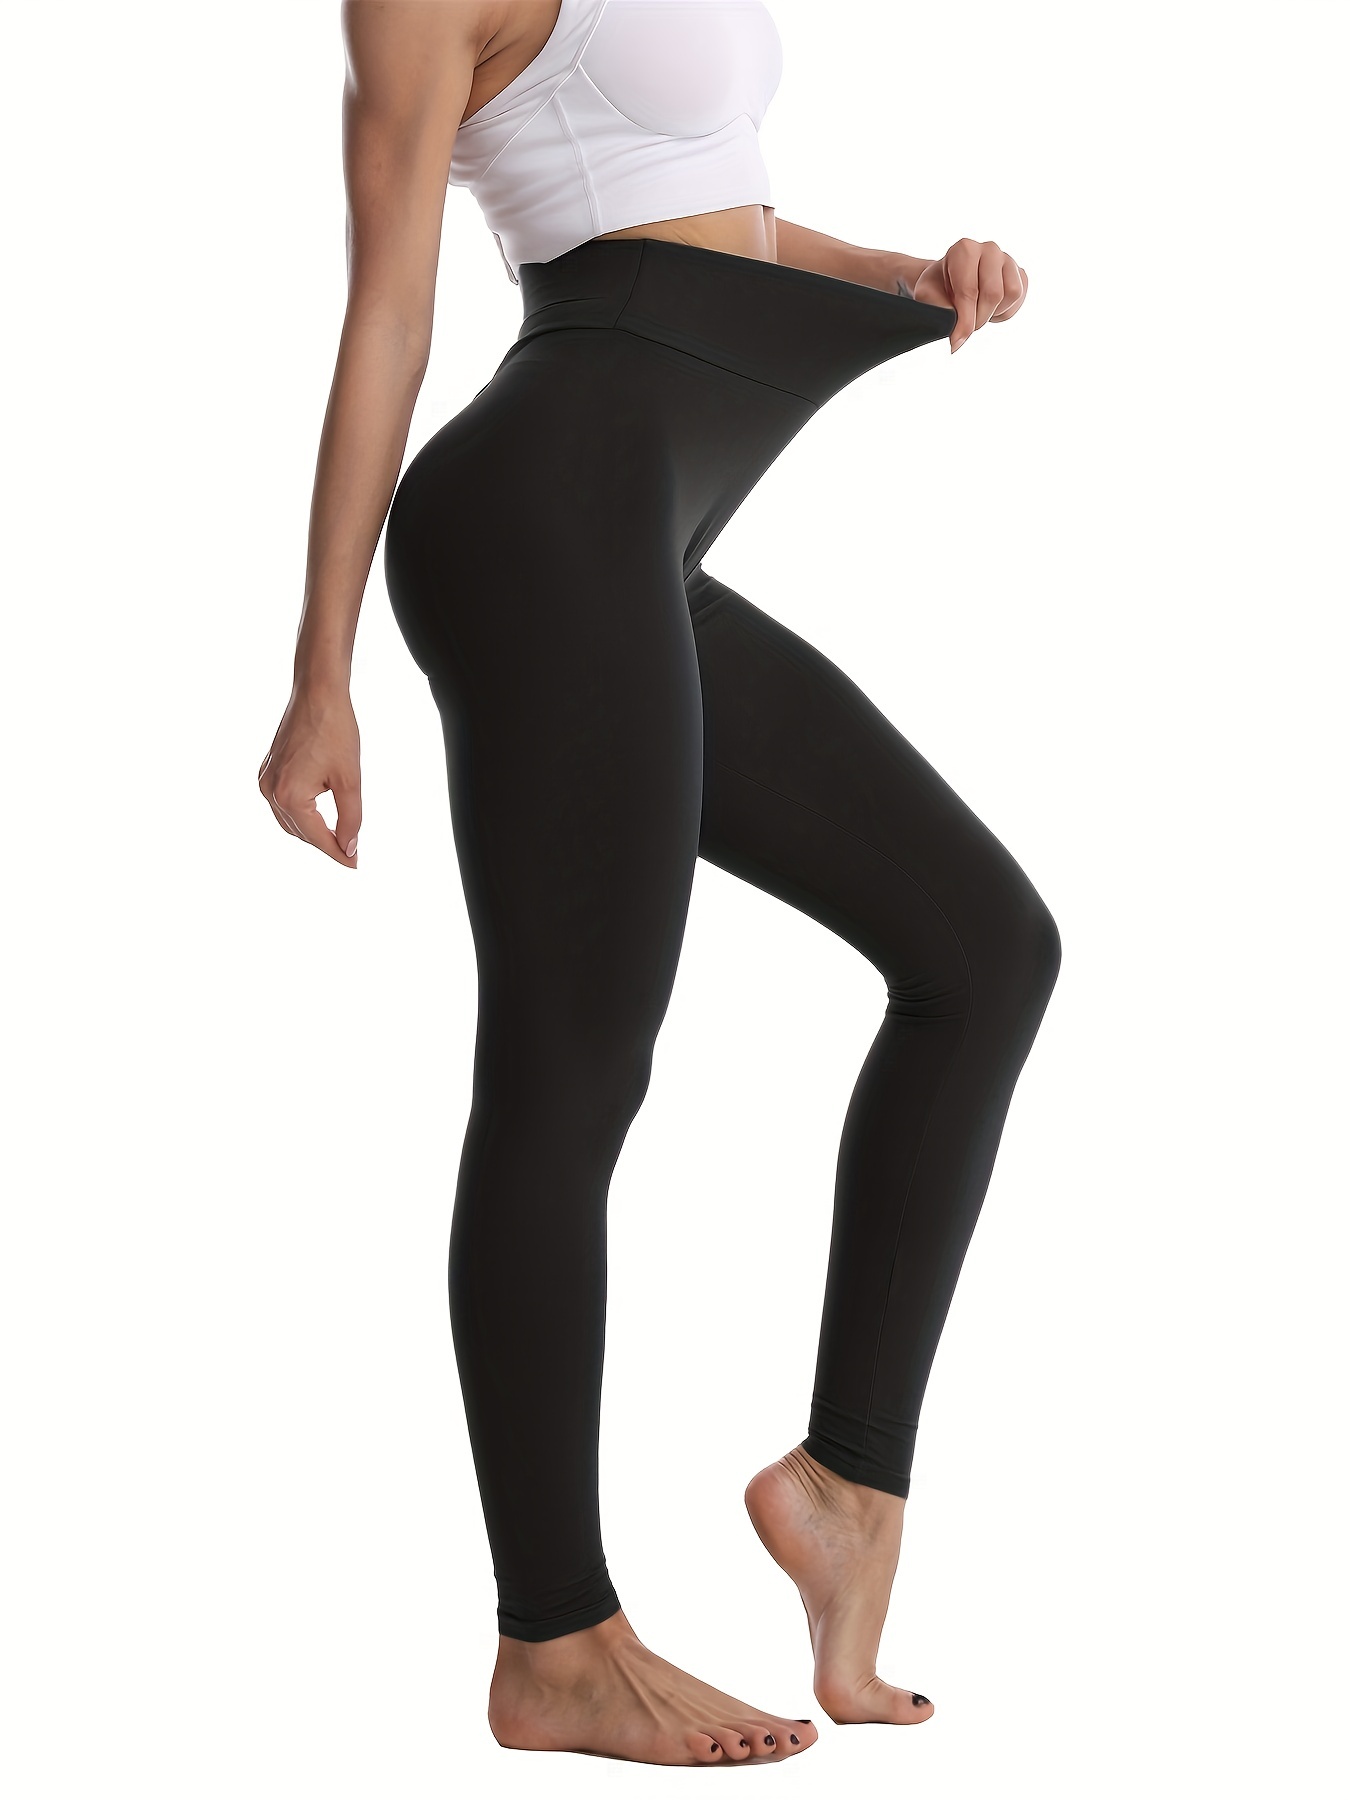 YWDJ Leggings for Women Tummy Control Women High Waist Printed Tight  Fitness Yoga Pants Nude Hidden Yoga Pants Black L 